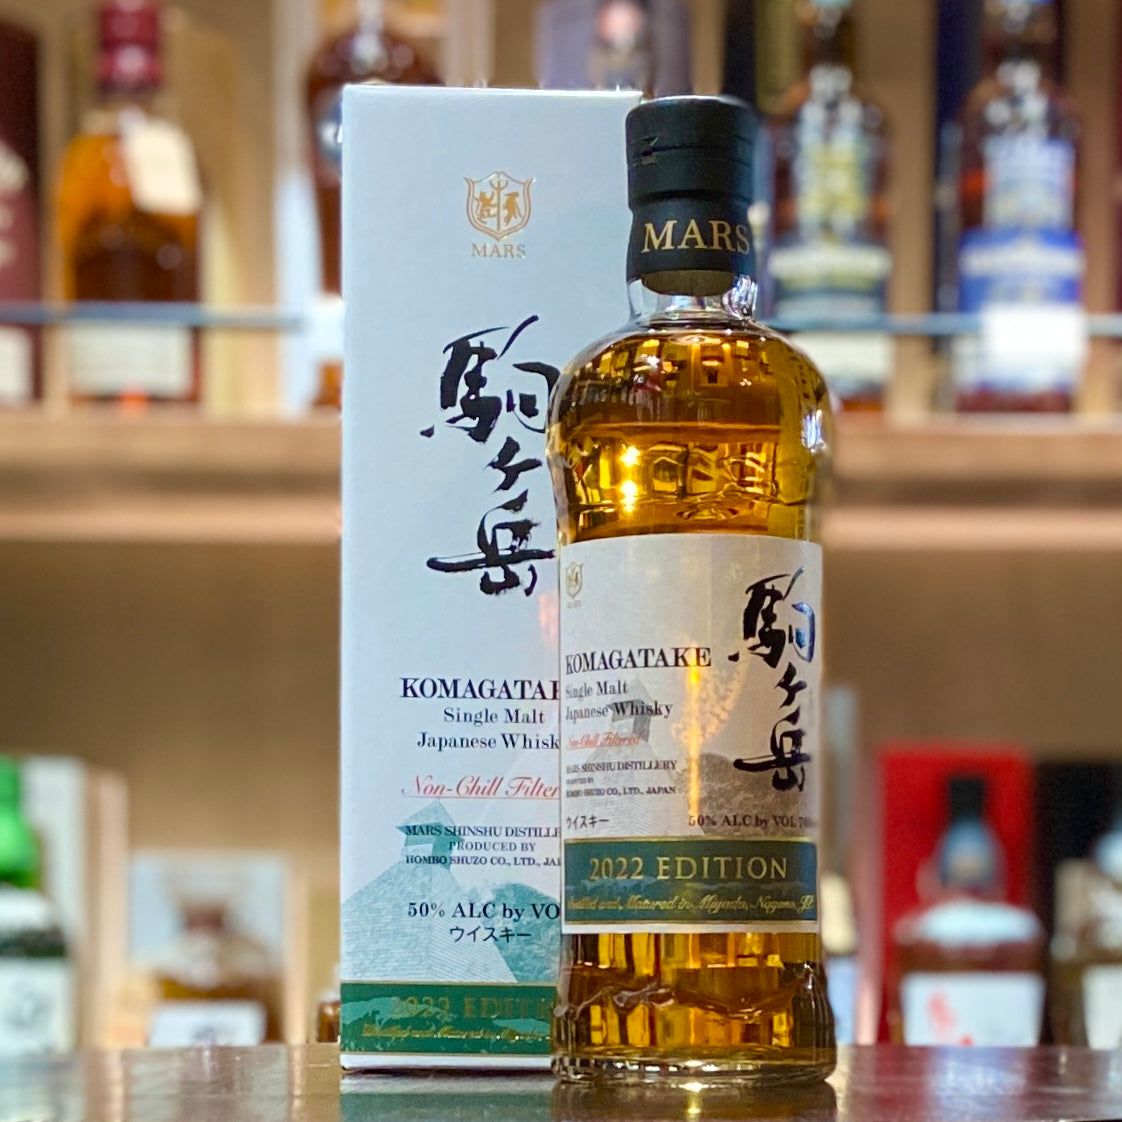 Mars Komagatake 2022 Edition Single Malt Japanese Whisky